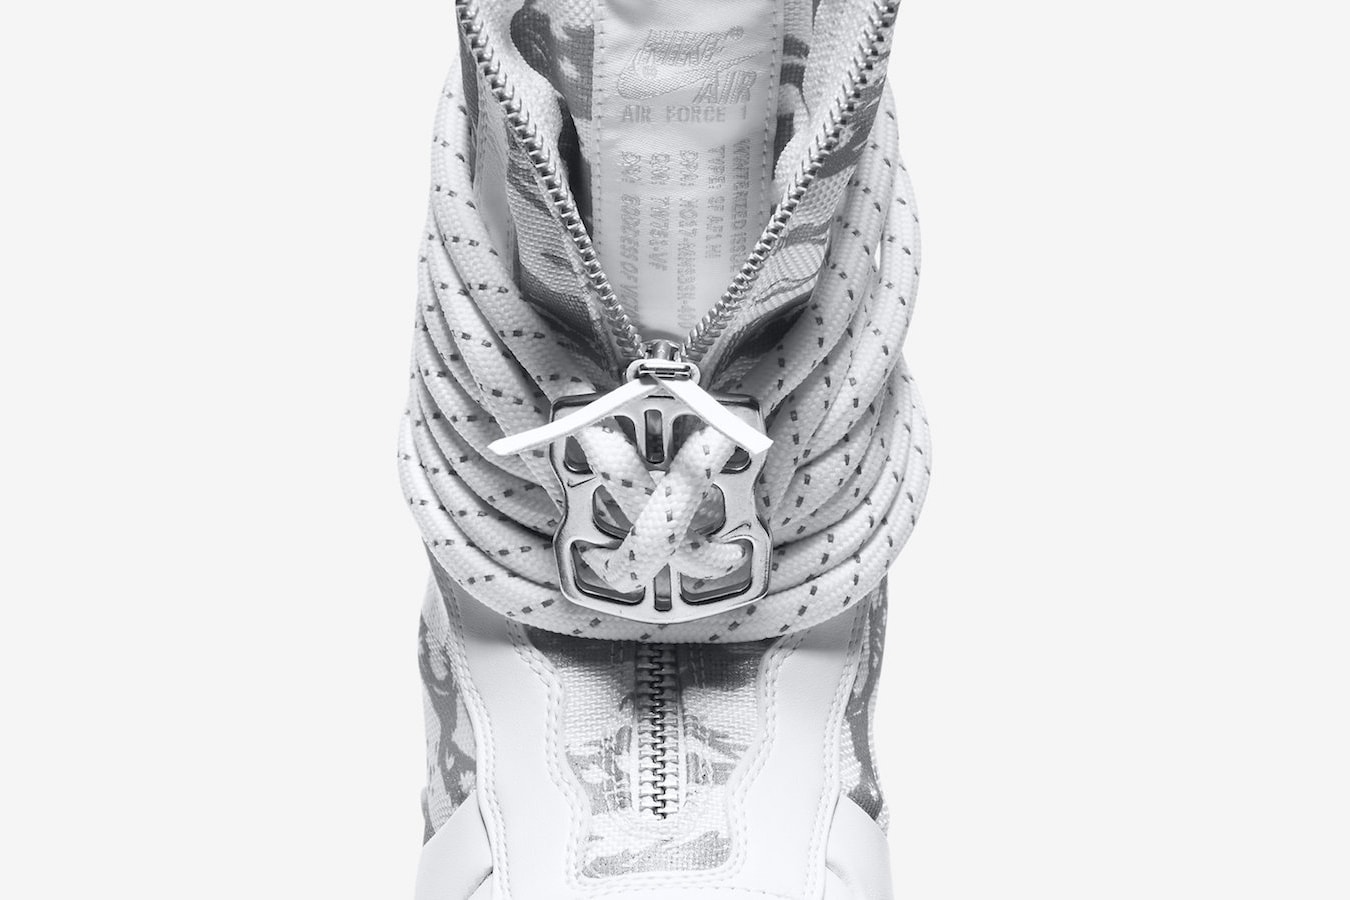 Nike SF-AF1 High Winter Camo Footwear Sneakers Shoes Closer Look Release Date Info Drops